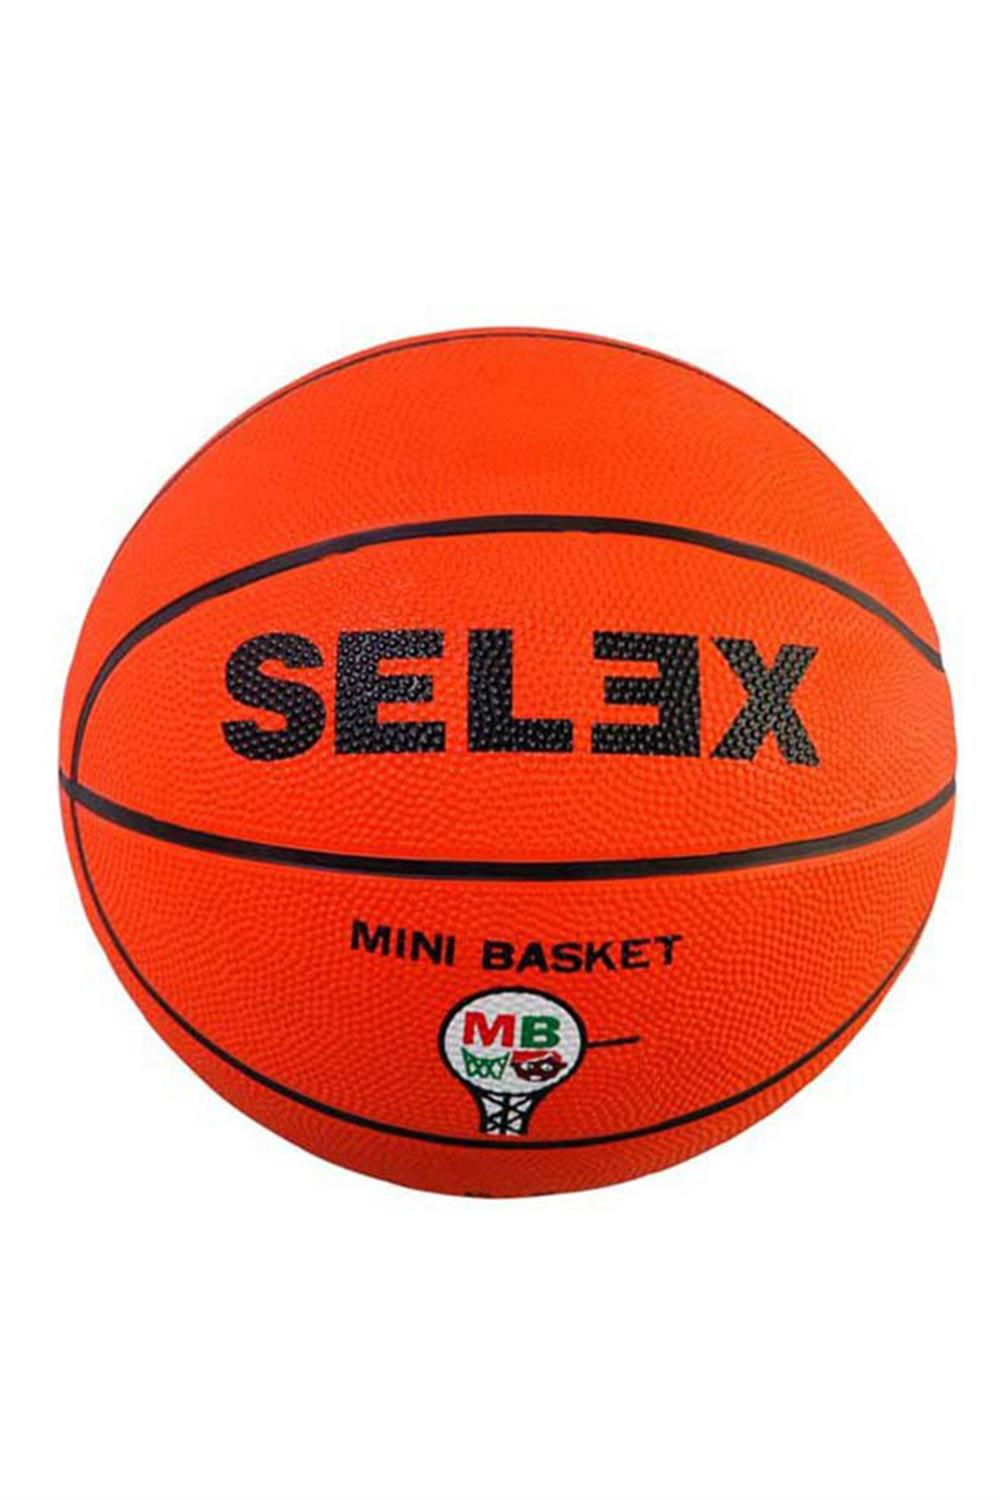 Selex Basketbol Topu B-5 | Sporborsasi.com